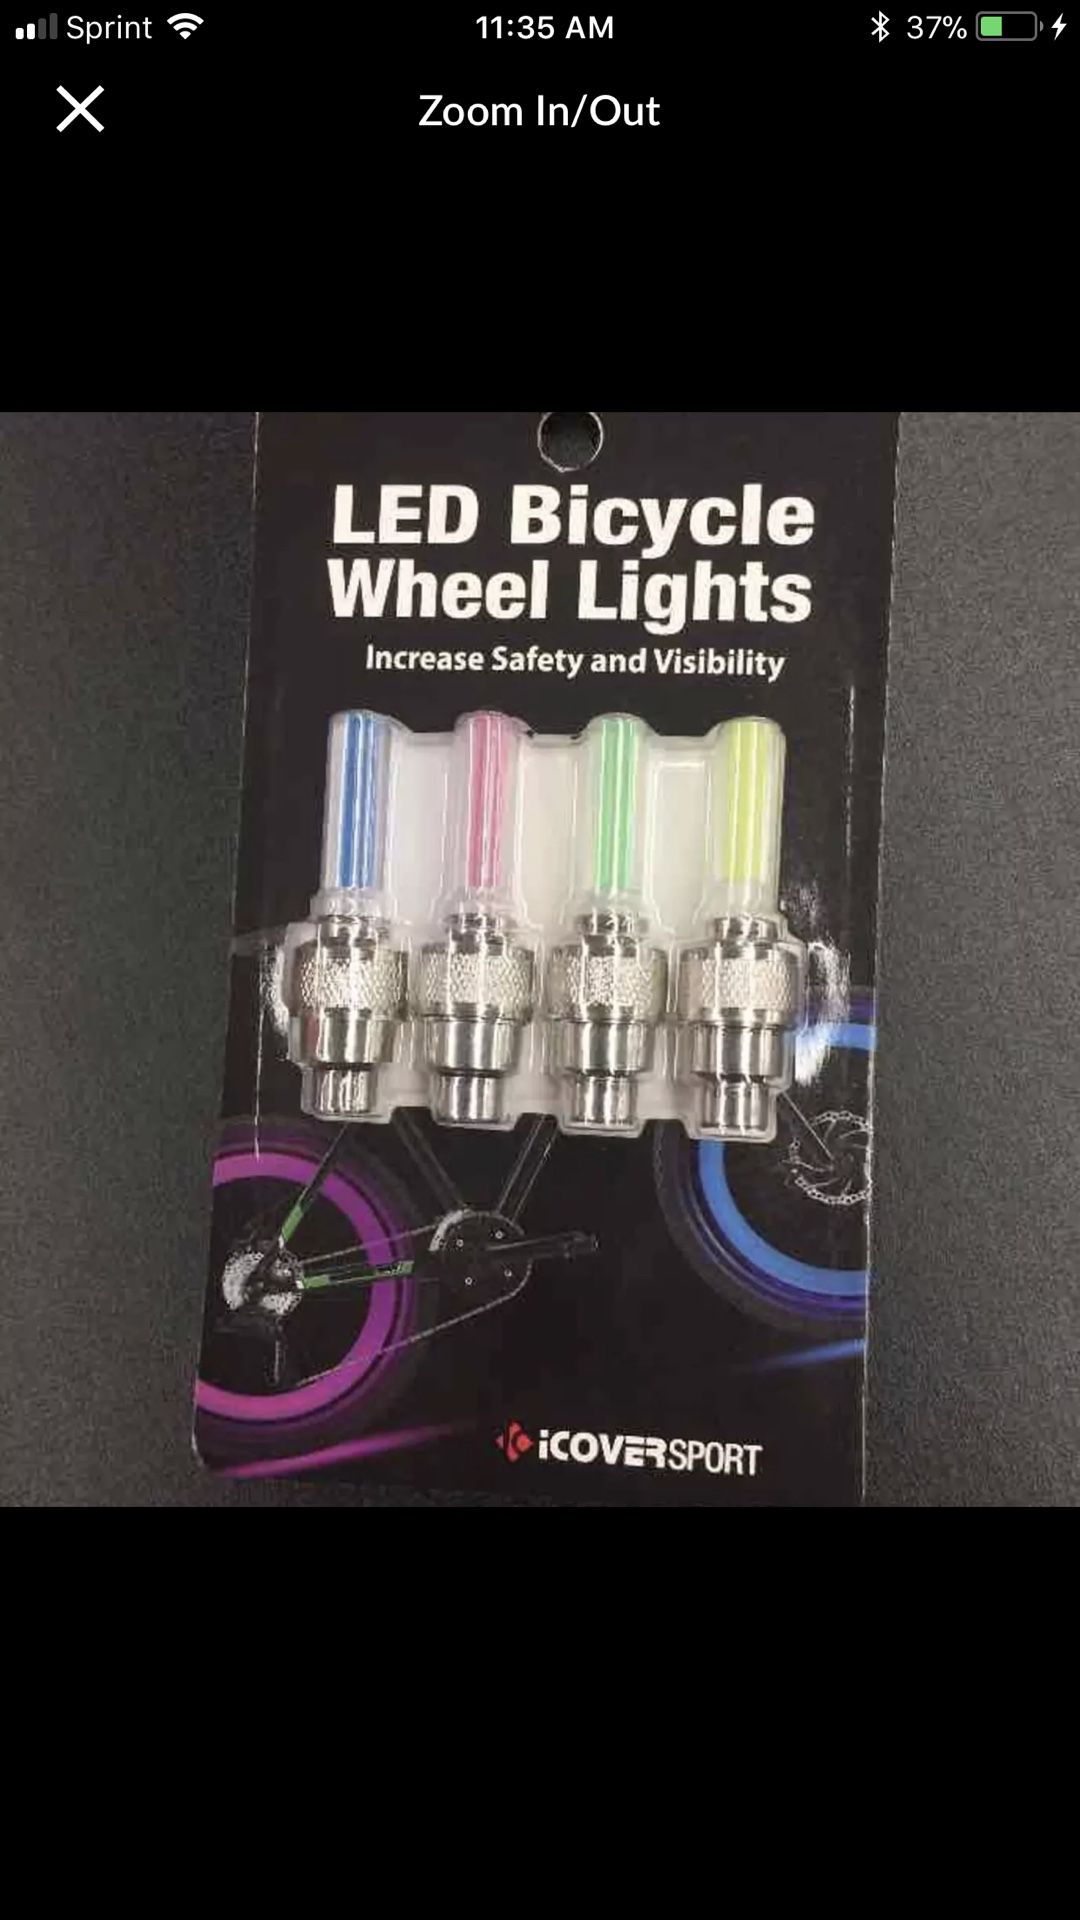 LED bike lights! Brand new